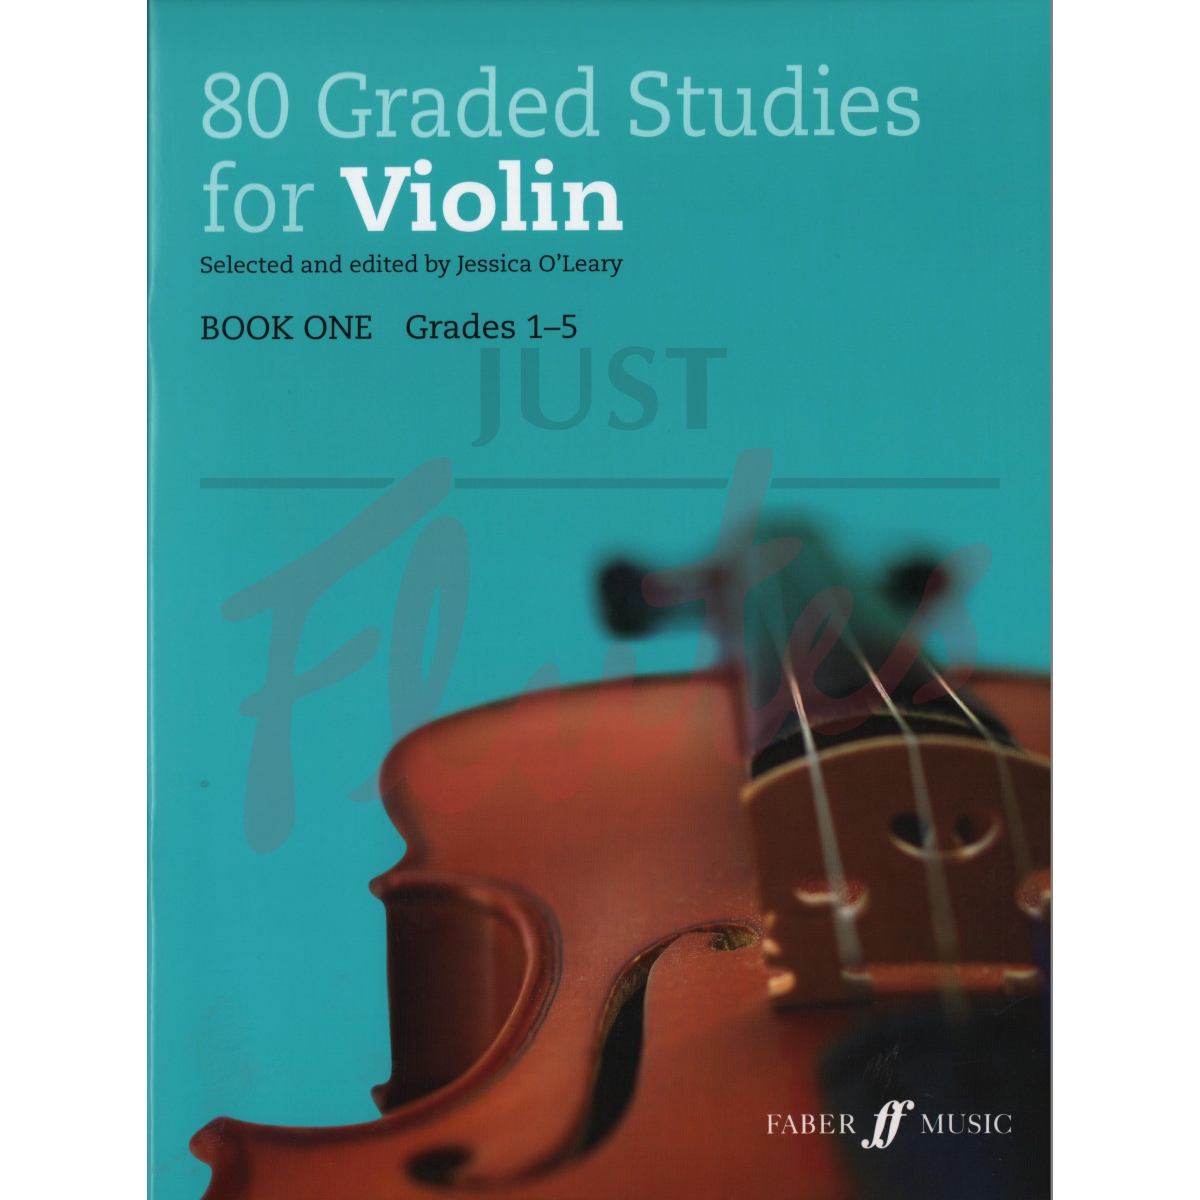 80 Graded Studies for Violin Book 1 Grades 1-5